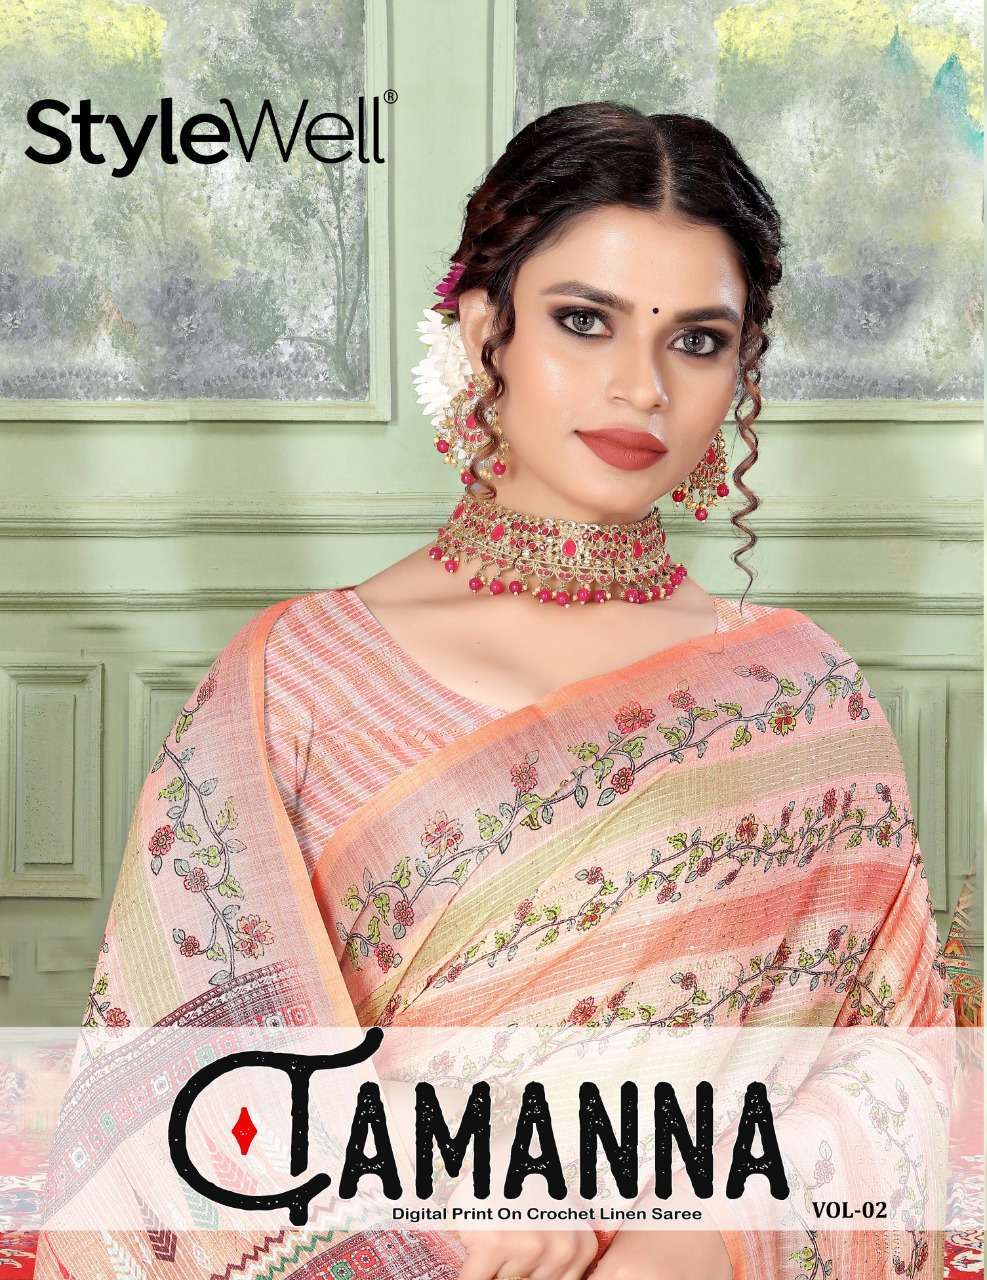 stylewell tamanna vol 2 series 2237-2243 Digital Print On Crochet Linen saree